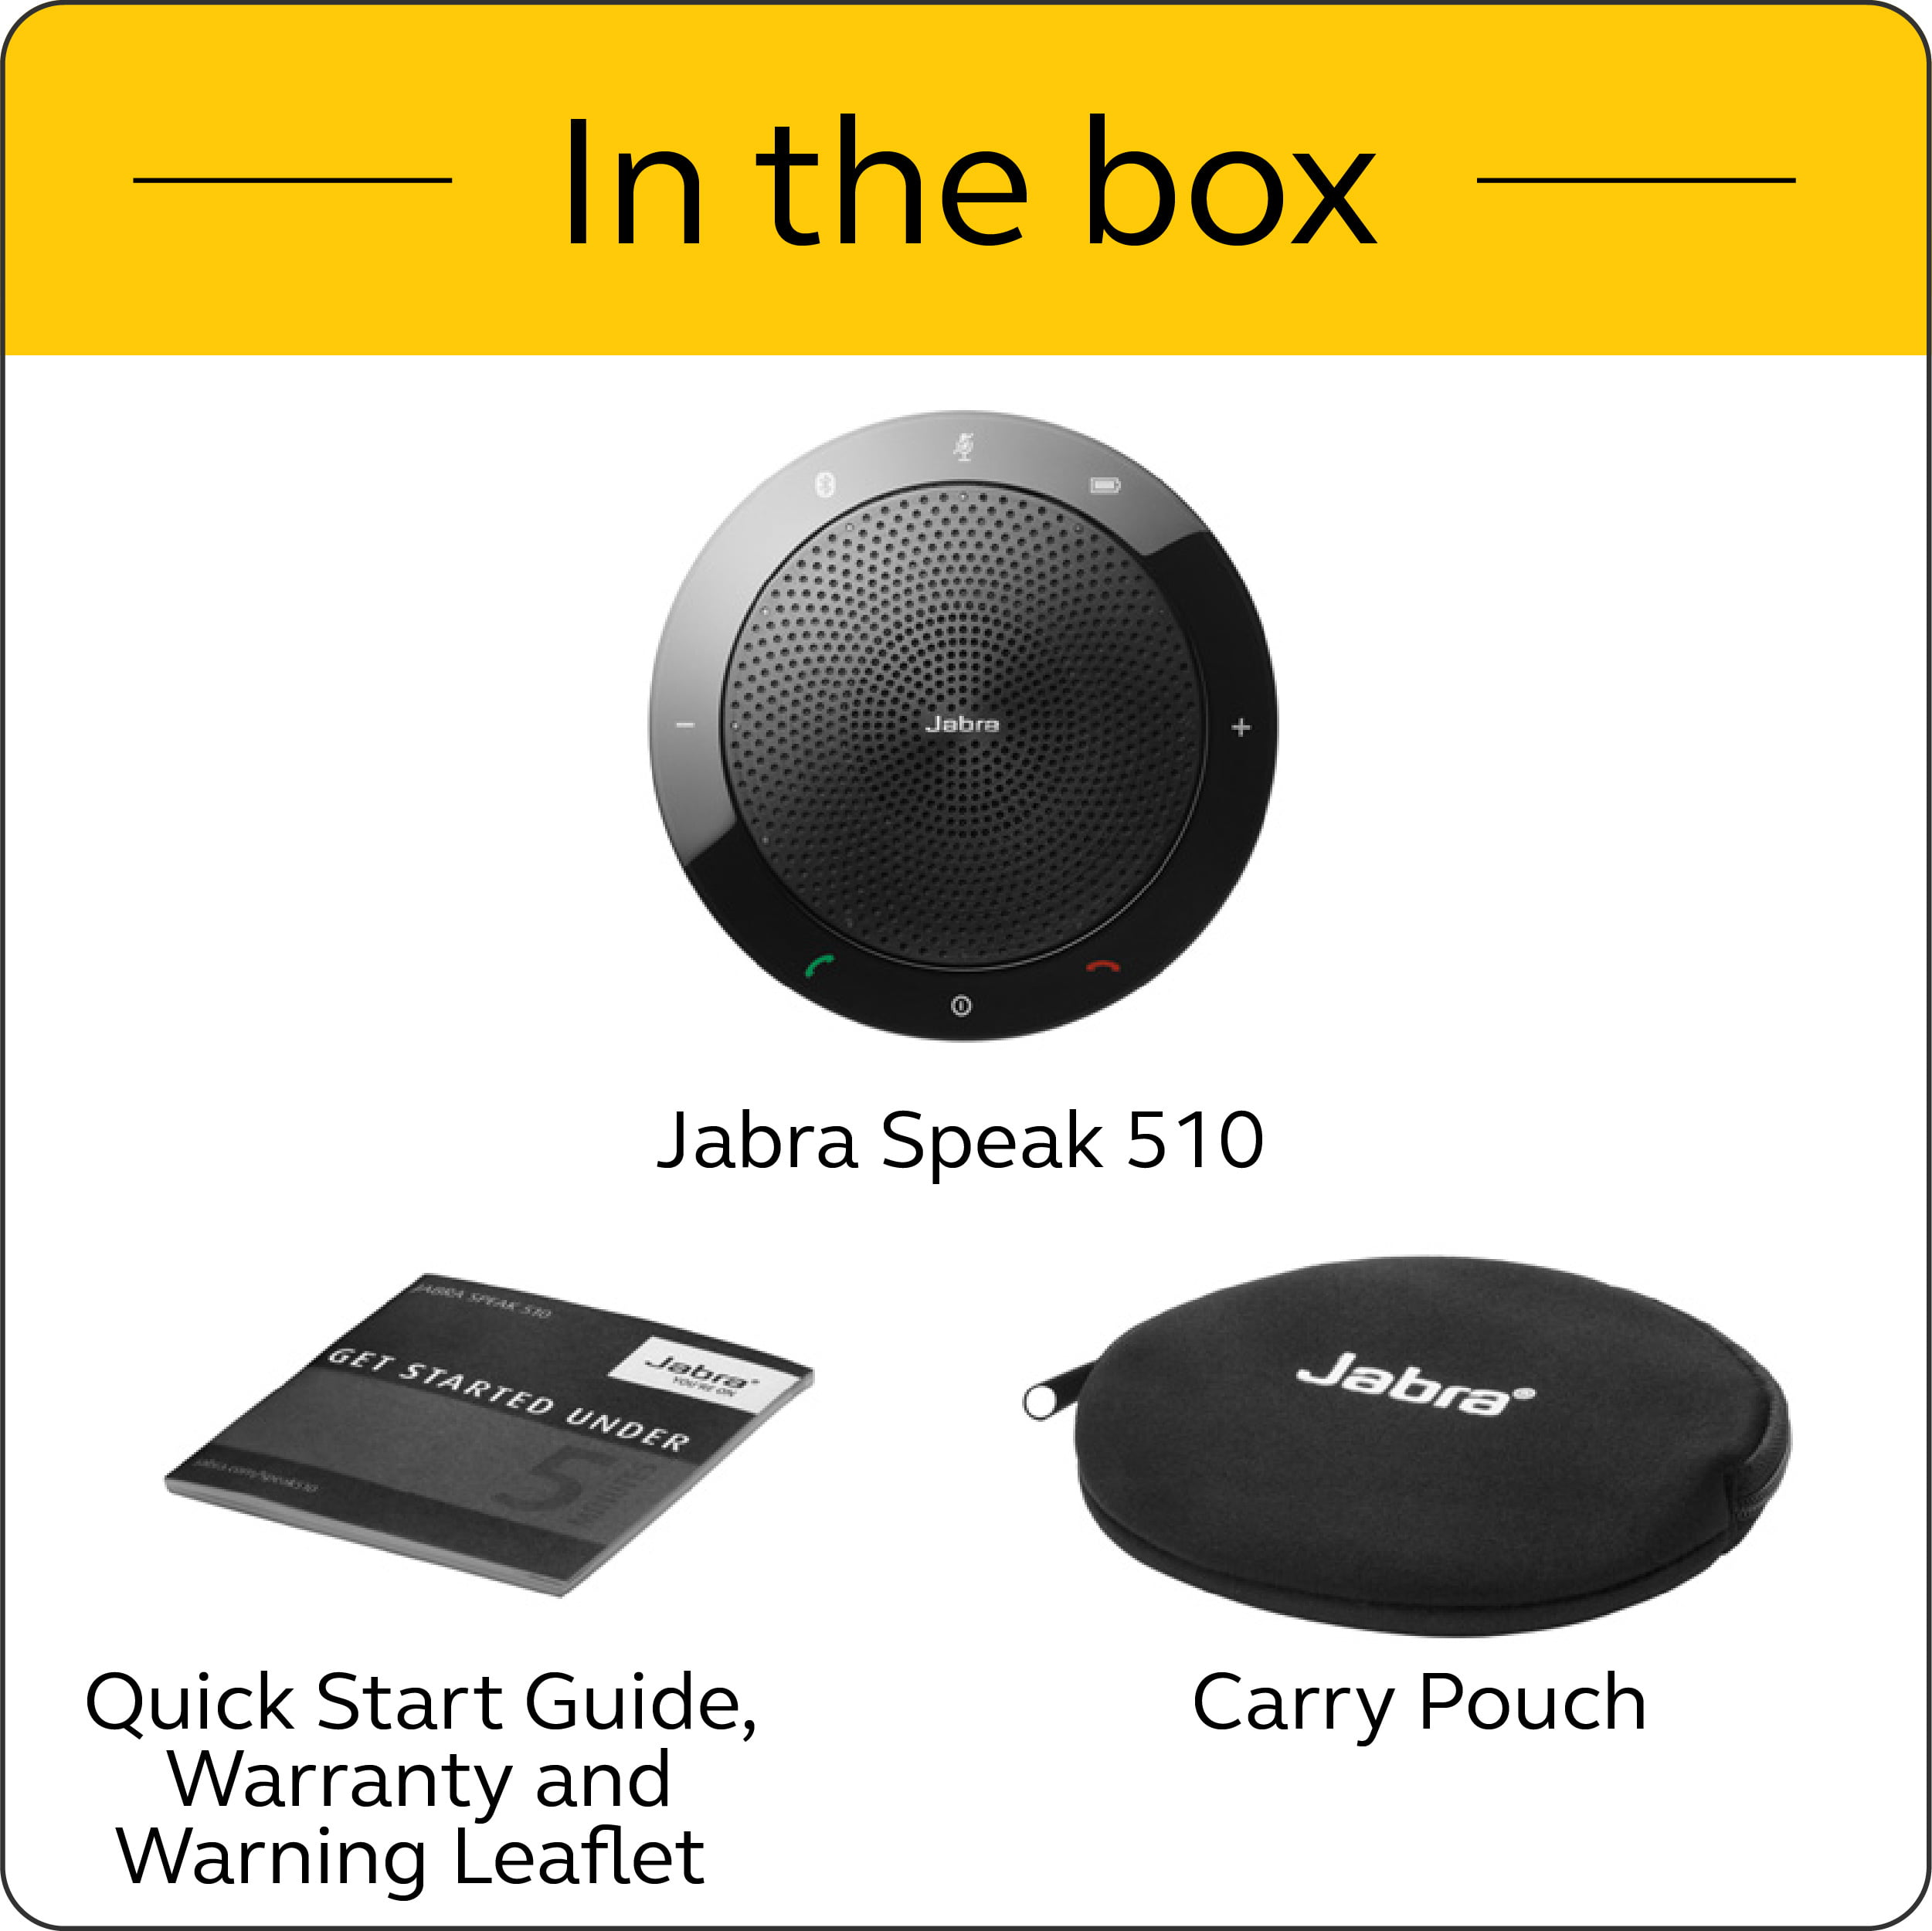 Speak 510 MS Portable Speaker for and Calls Black - Walmart.com